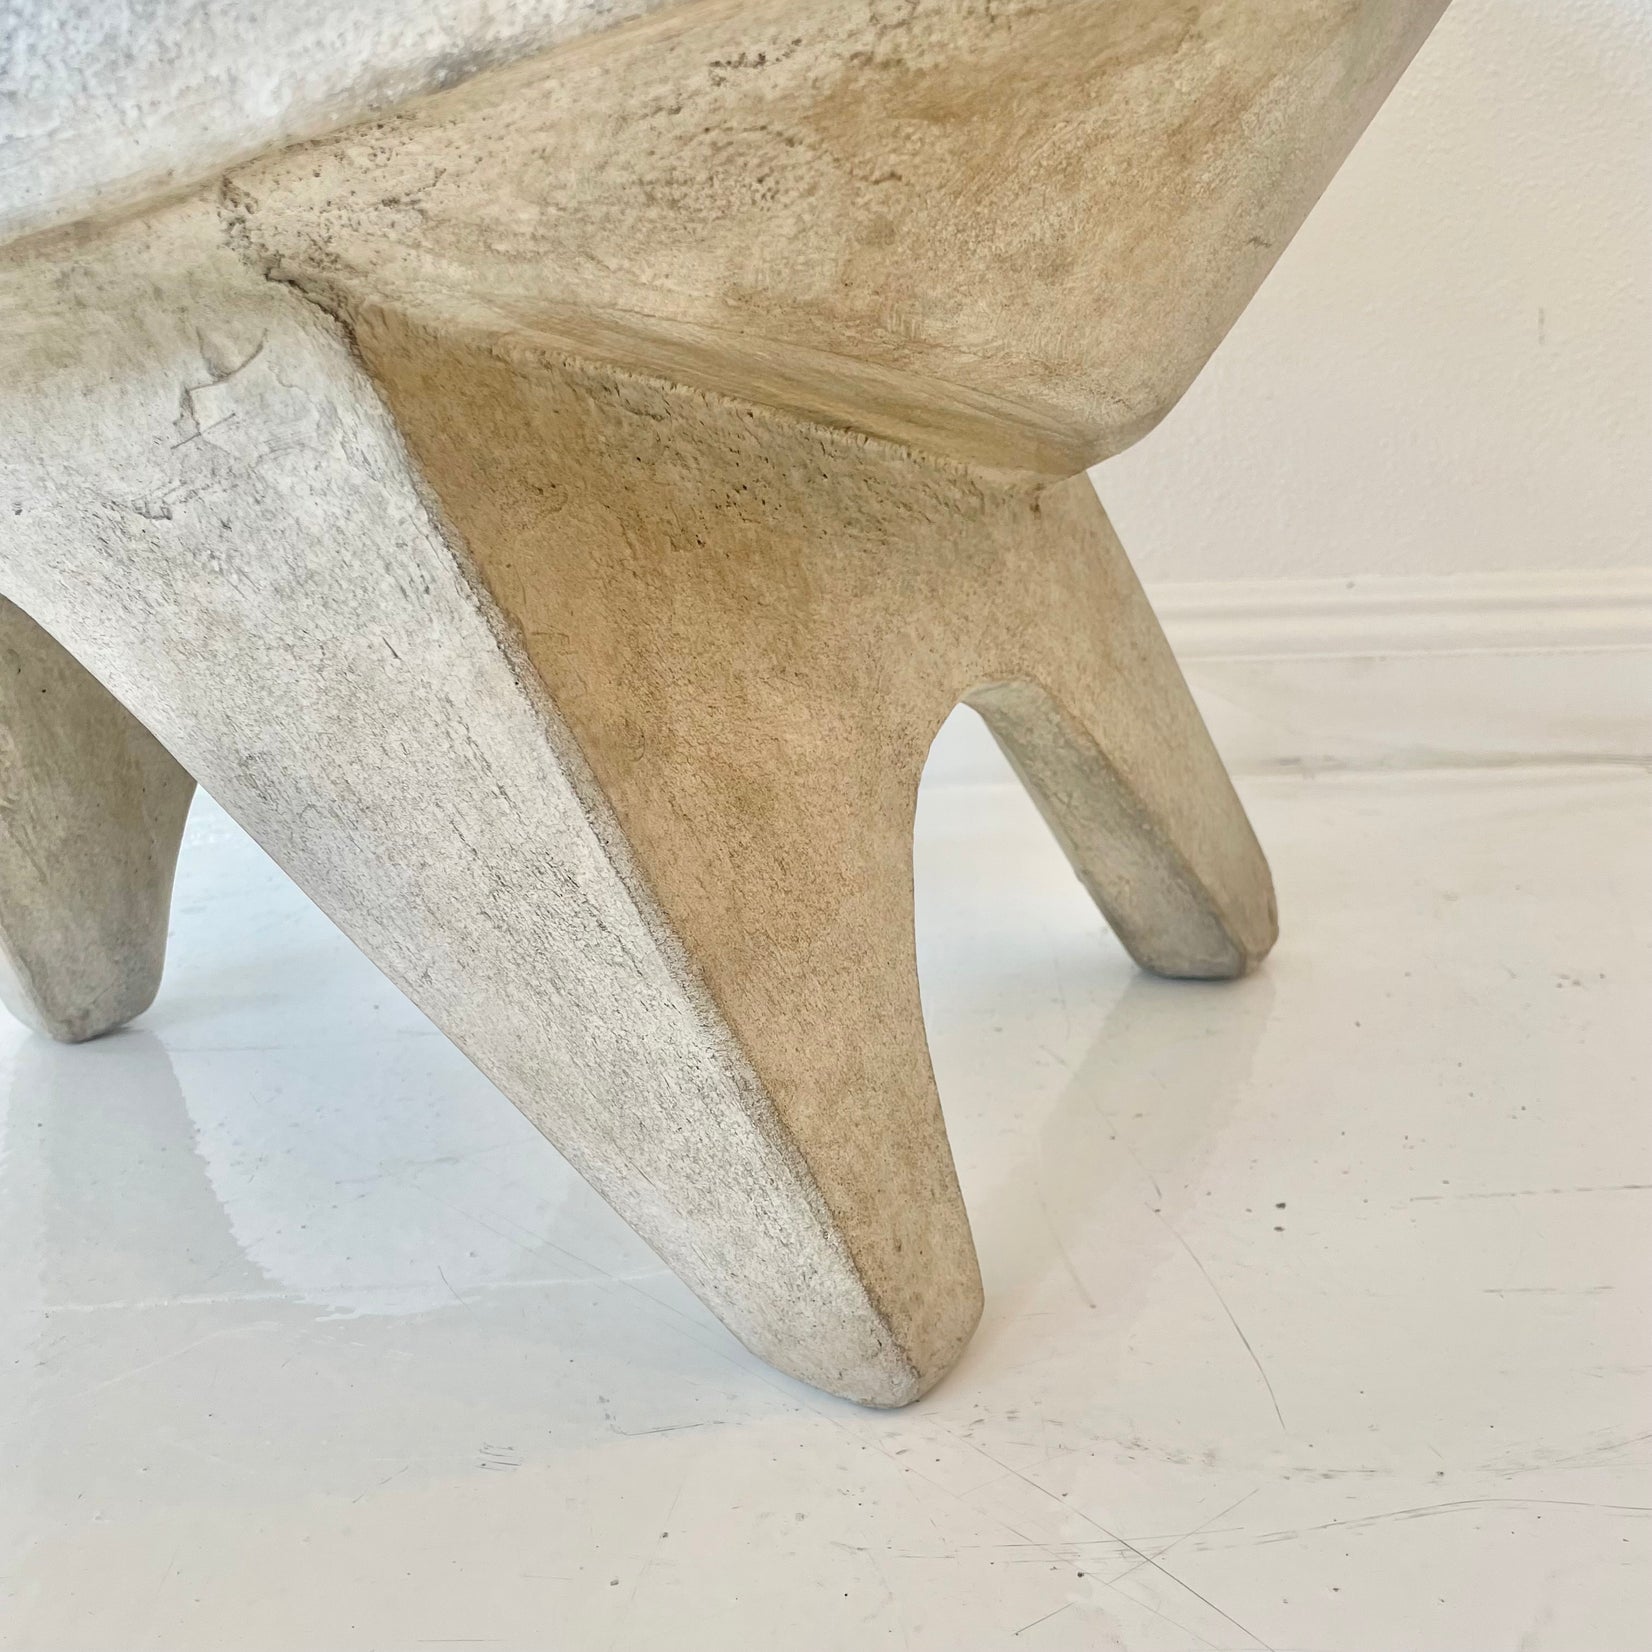 Sculptural Concrete Chair